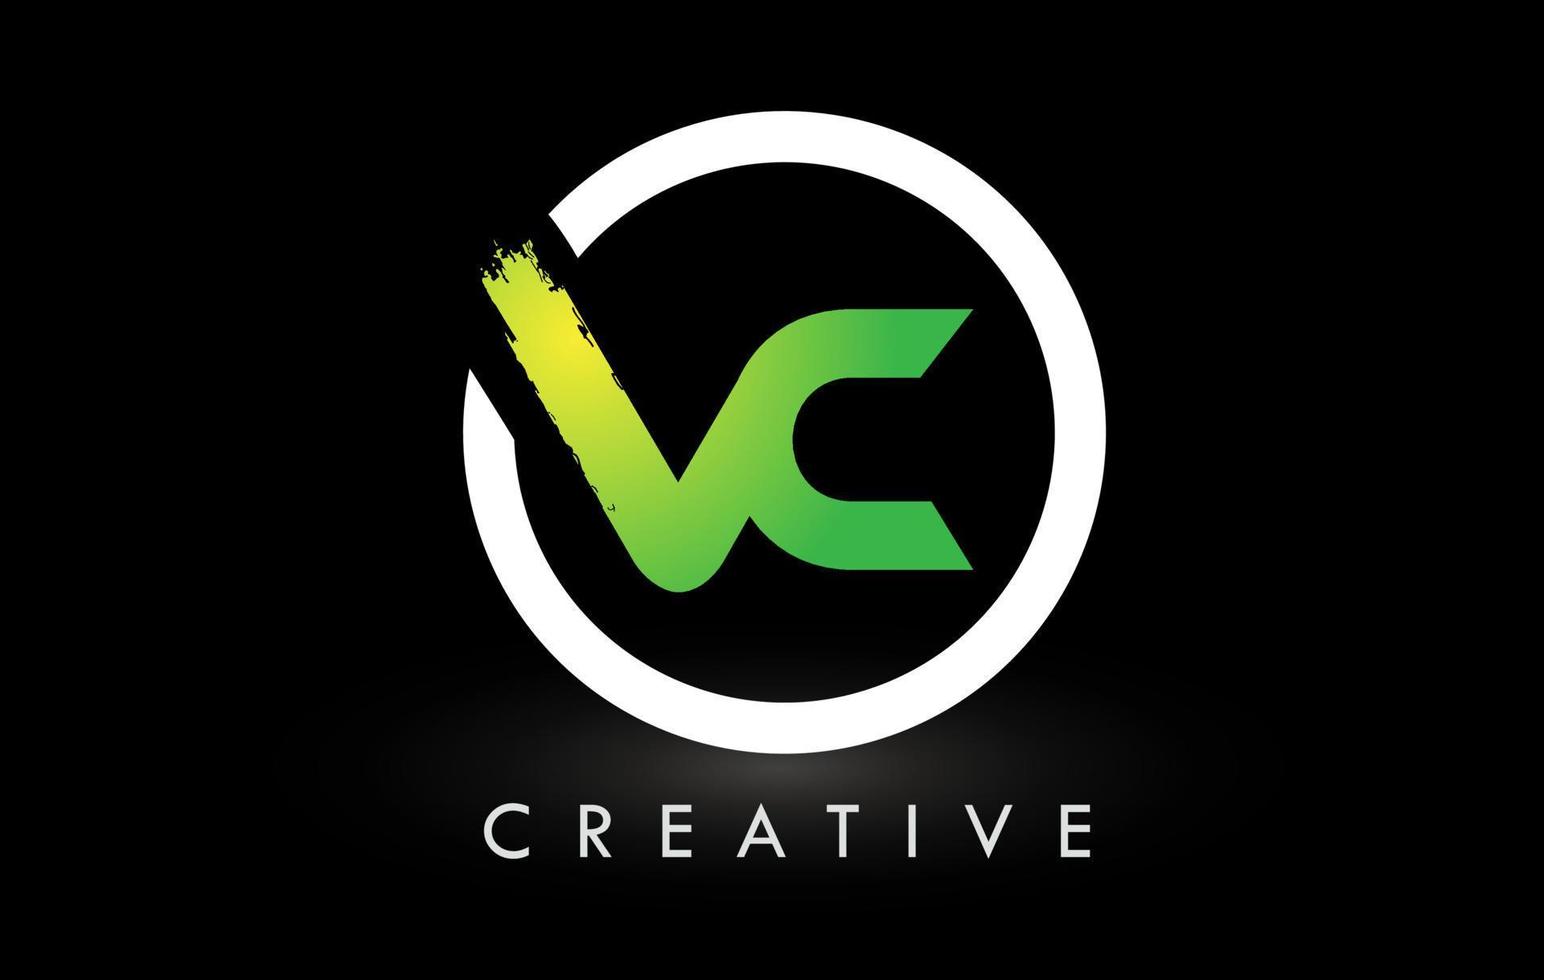 VC Green White Brush Letter Logo Design. Creative Brushed Letters Icon Logo. vector